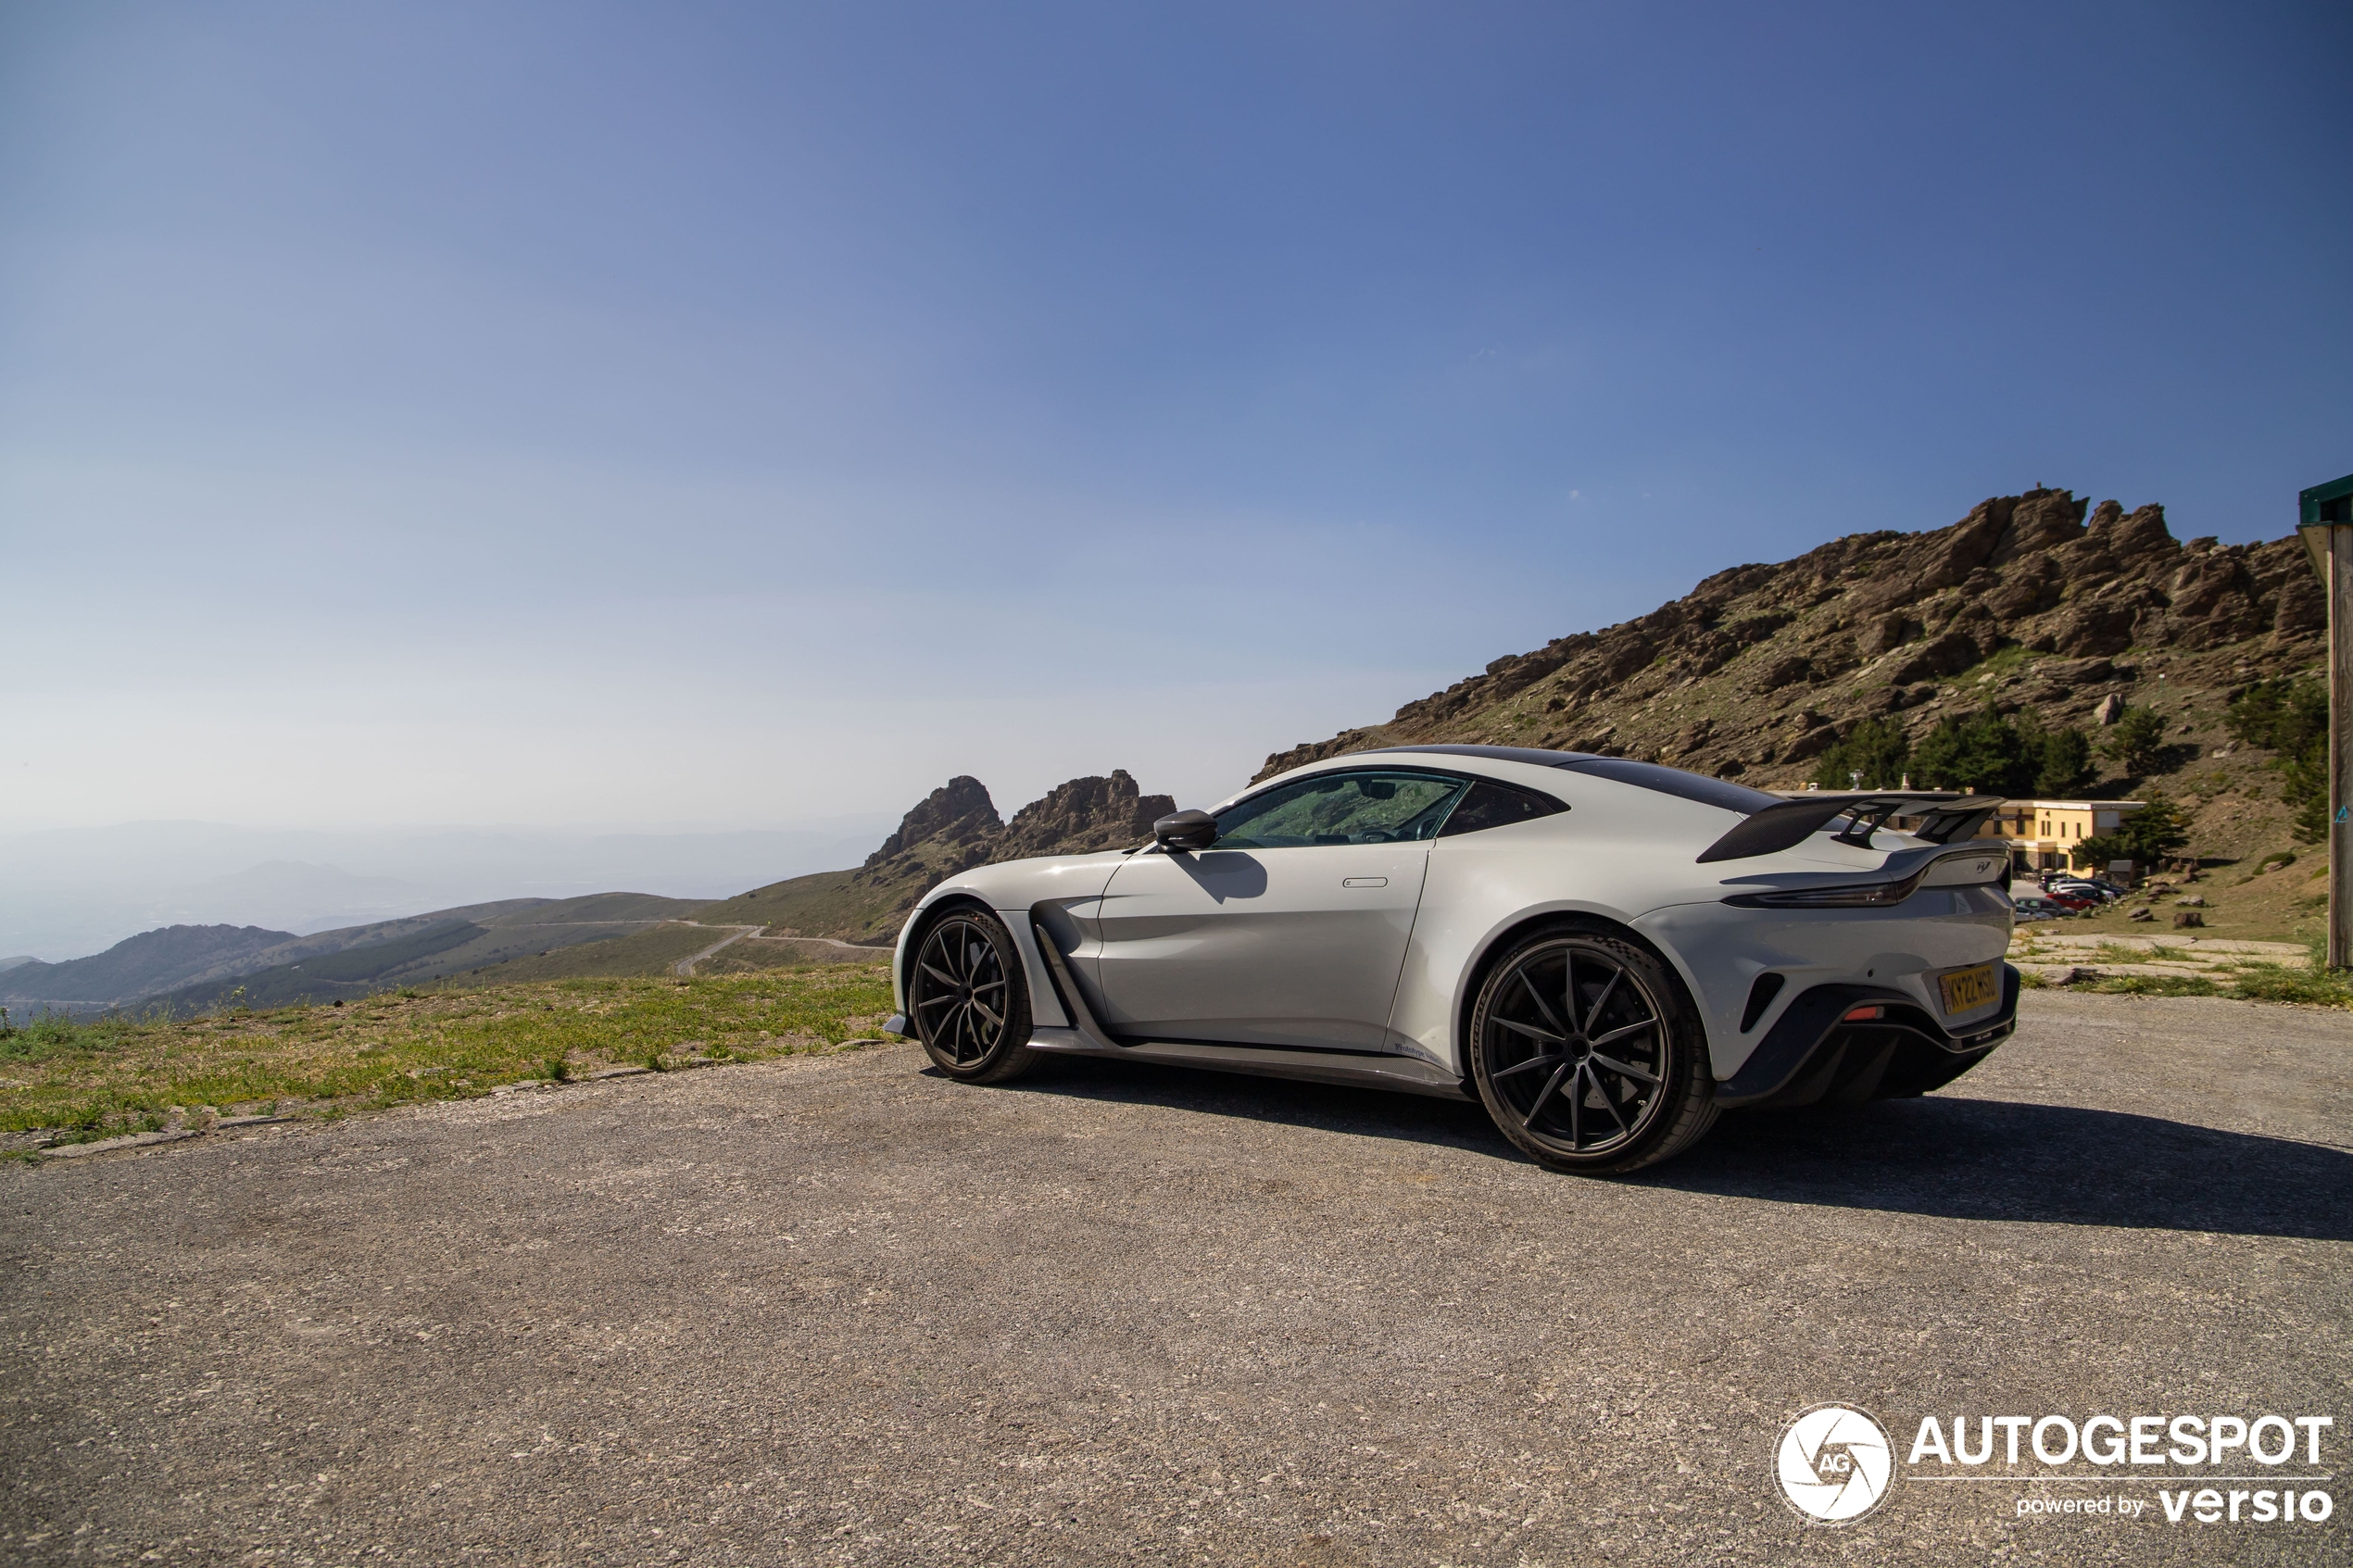 Aston Martin V12 Vantage maakt Sierra Nevada onveilig